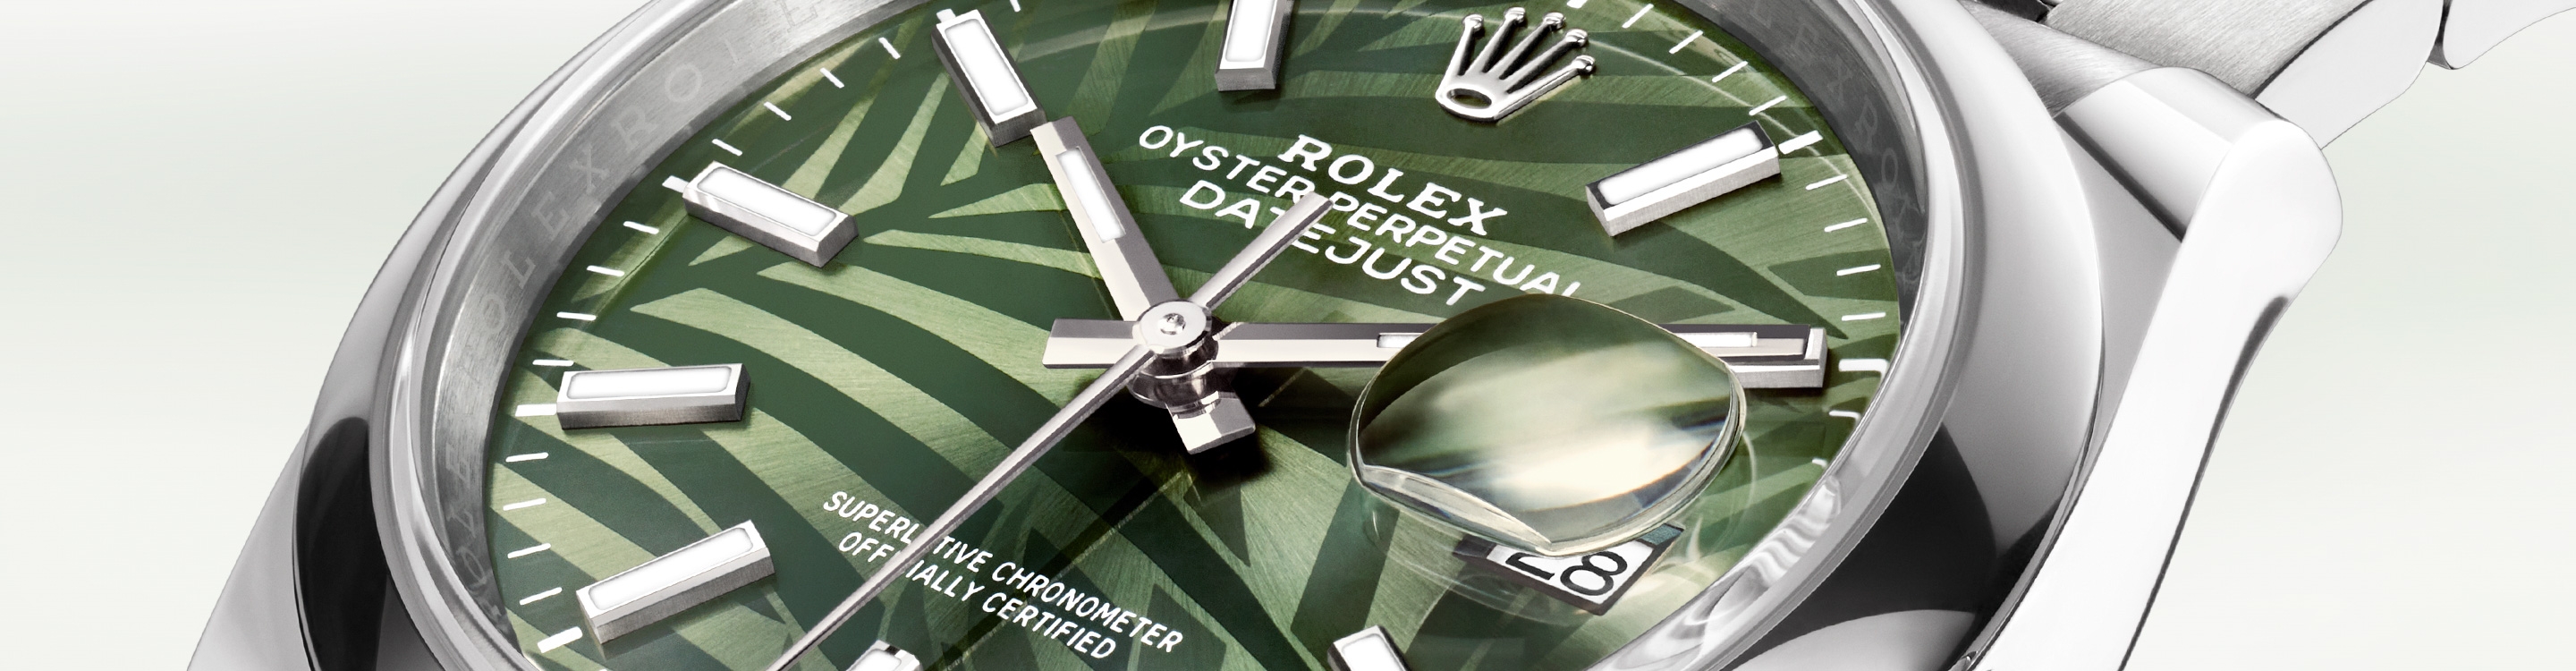 Rolex Datejust腕錶金款，M278288RBR-0006 | 歐洲坊